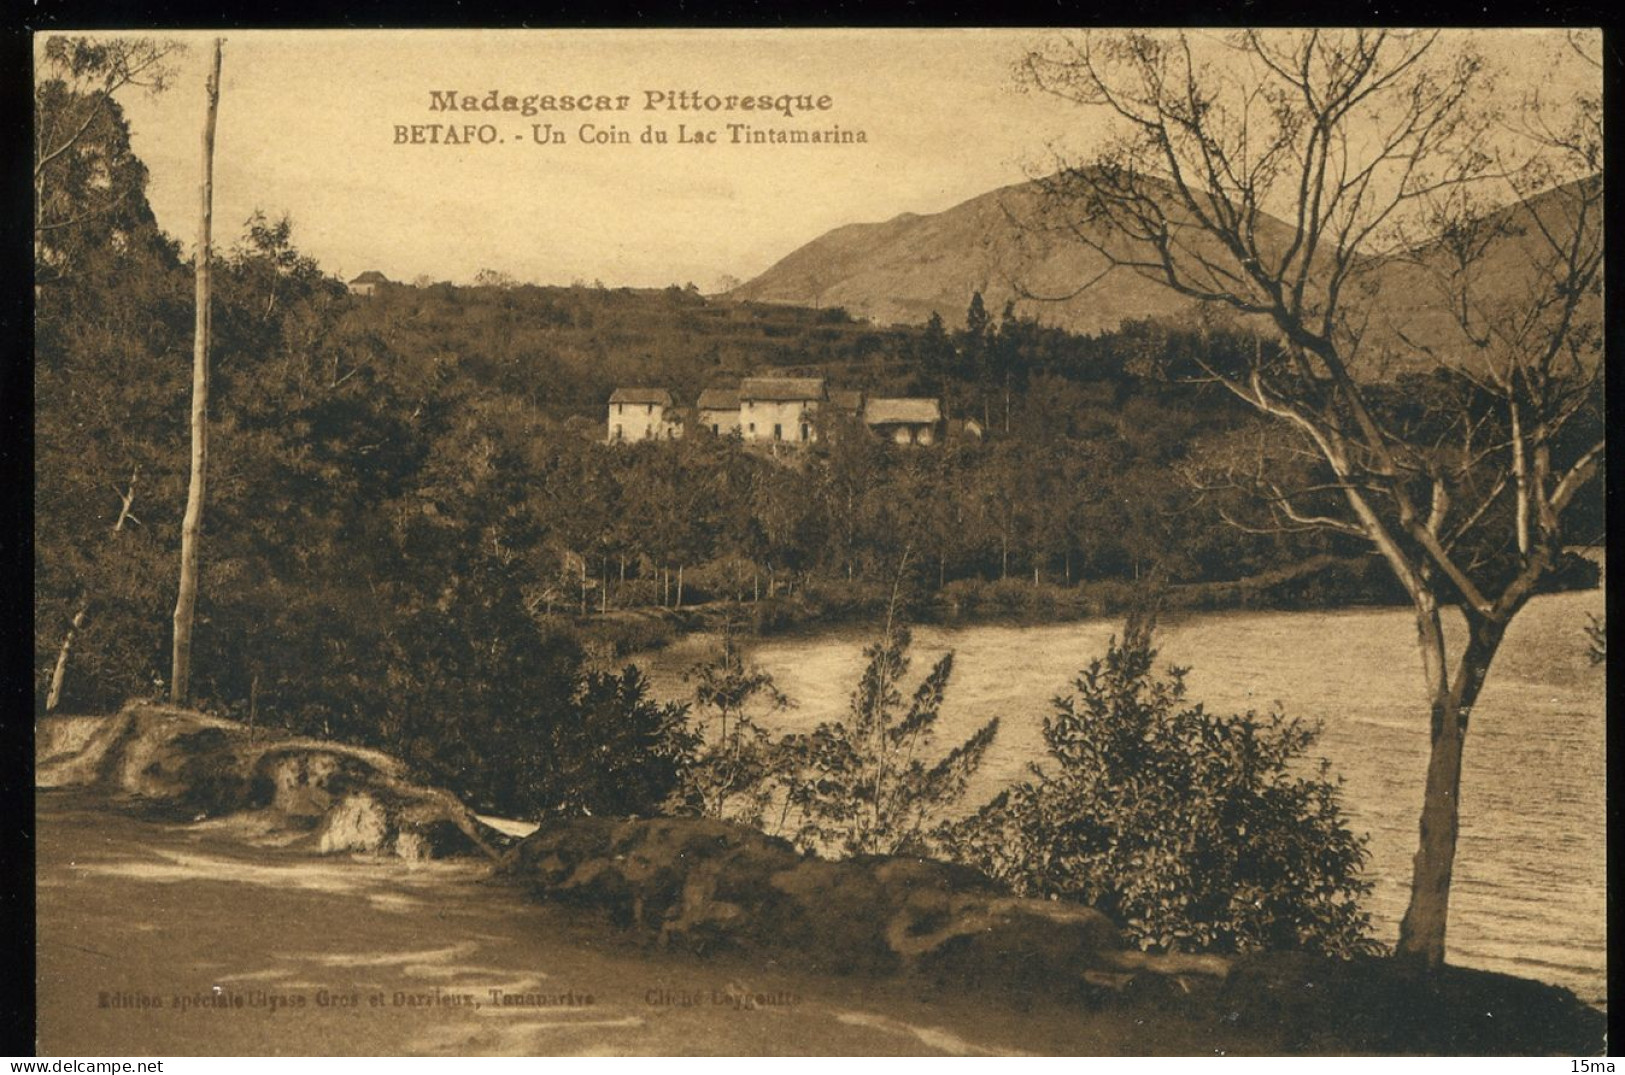 Betafo Un Coin Du Lac Tintamarina Madagascar Pittoresque Gros Et Darrieux 1925 - Madagascar